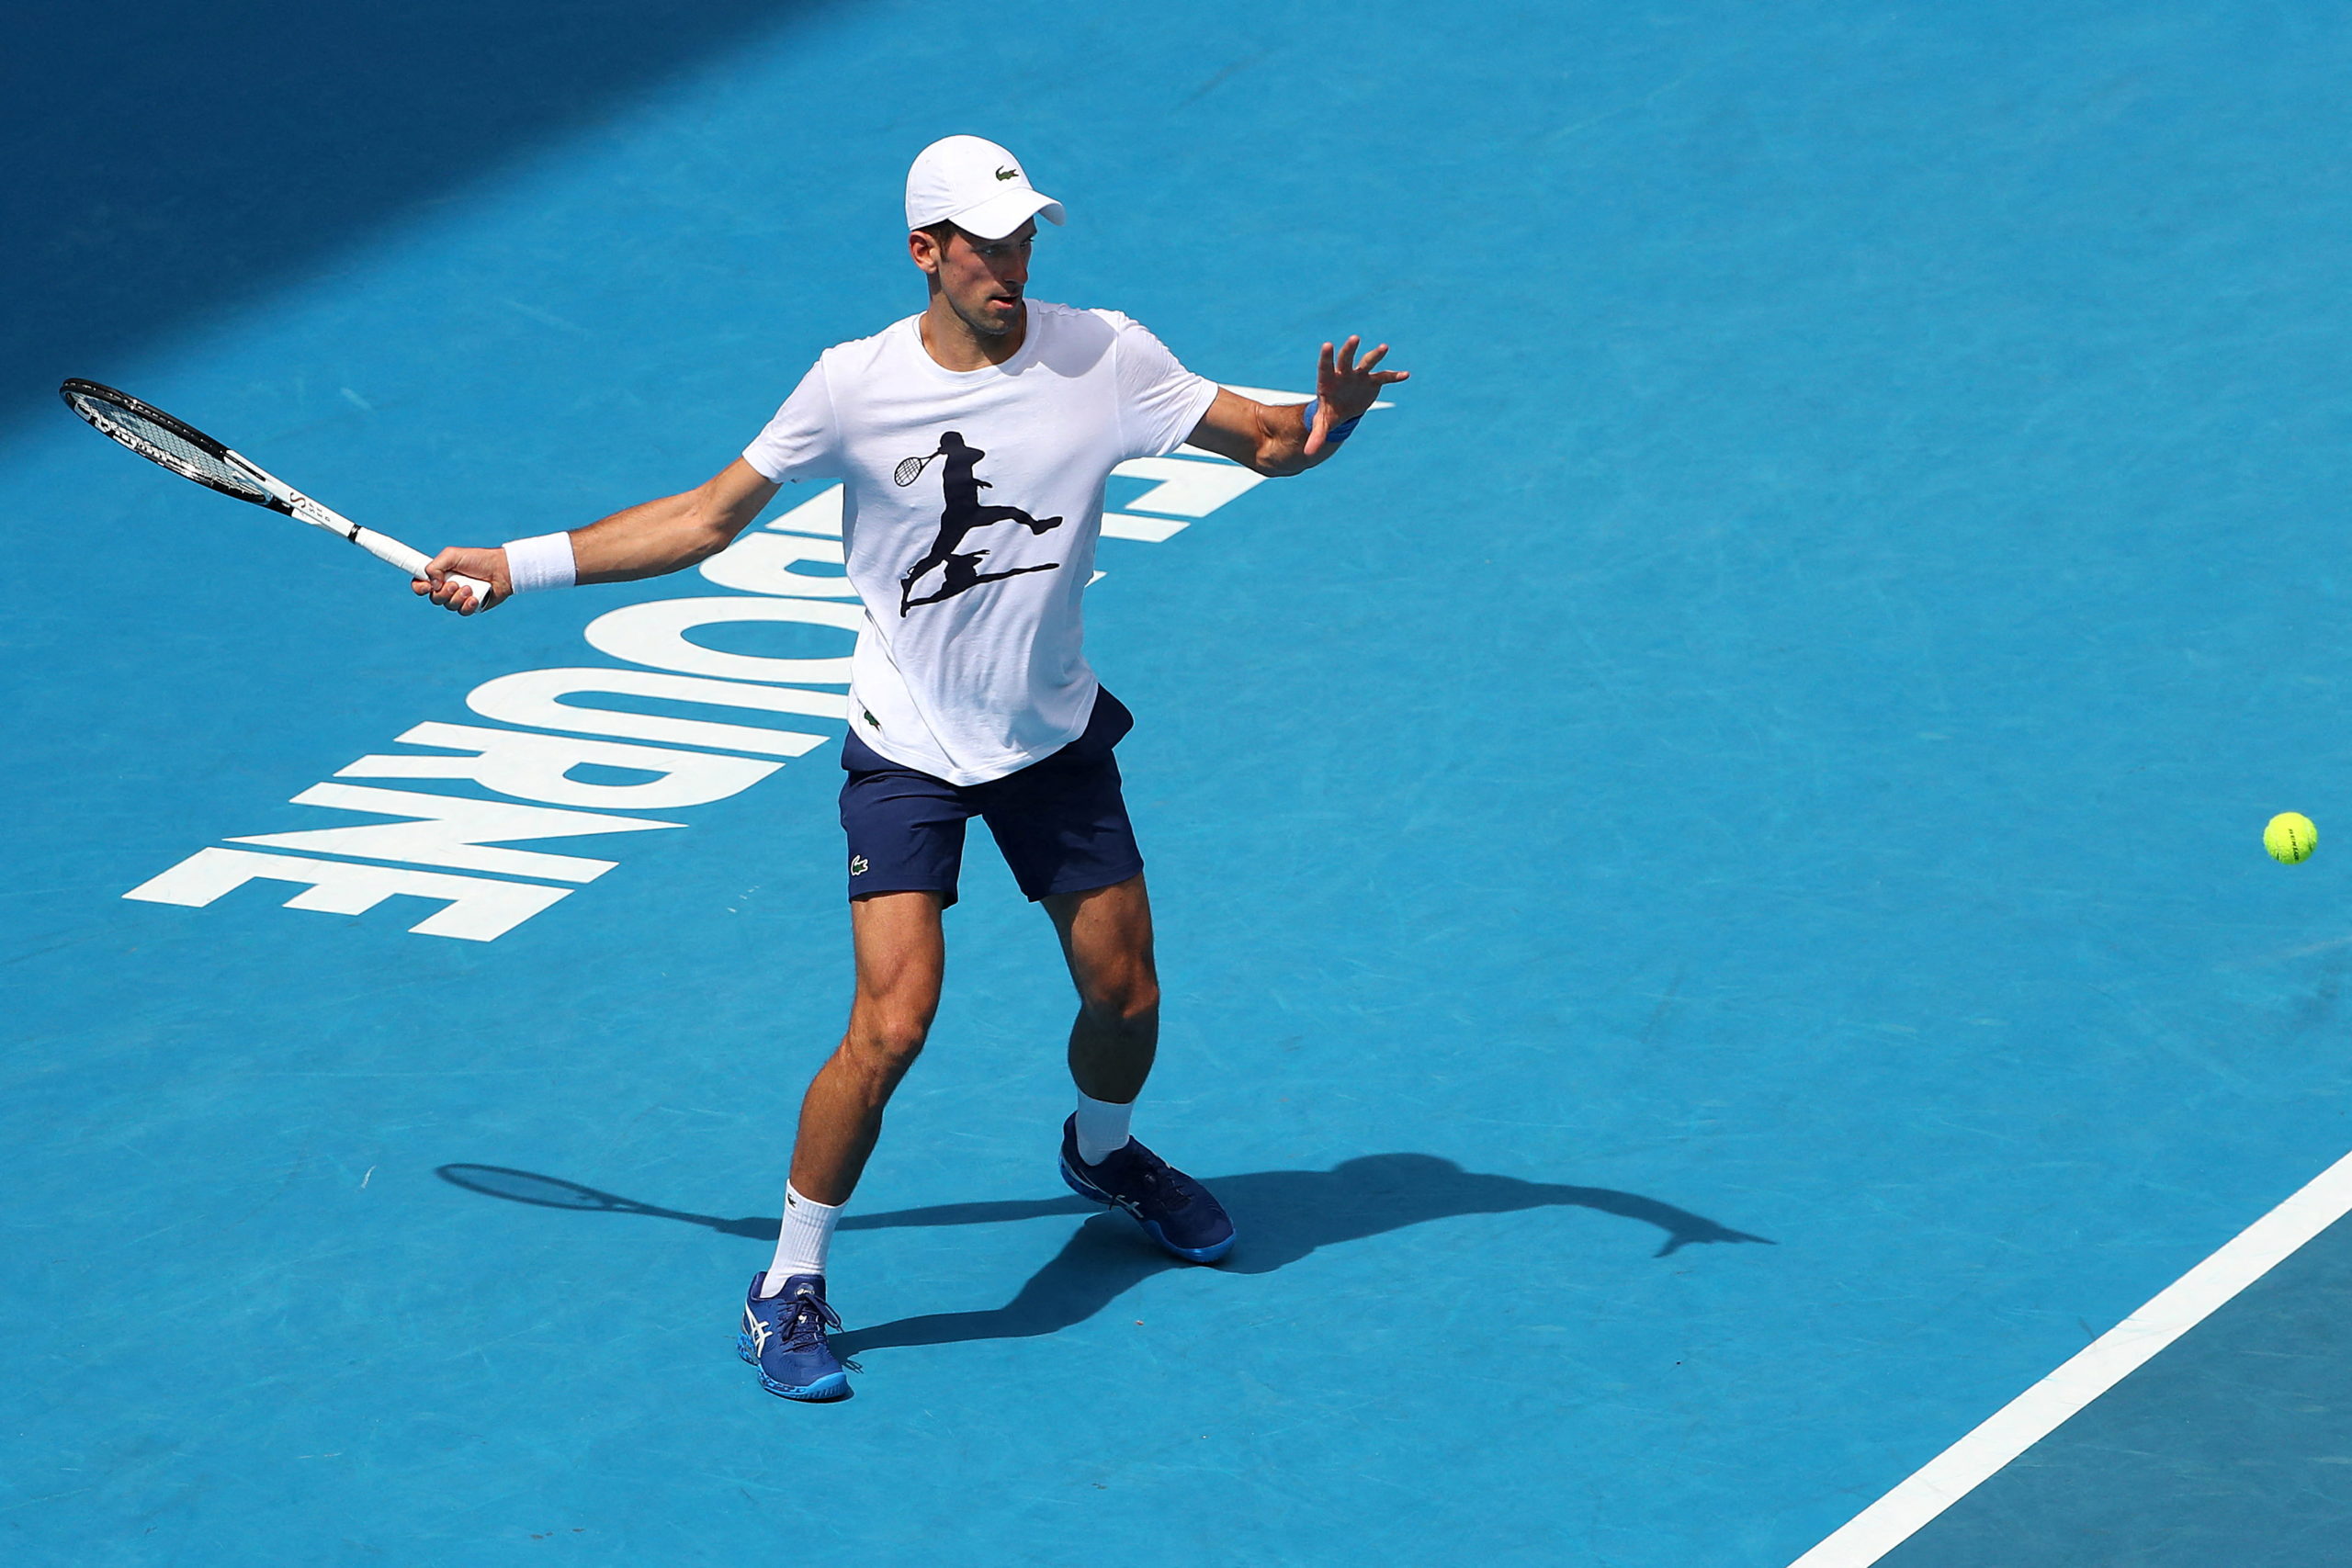 Serbian tennis player Novak Djokovic practices on Rod Laver Arena ahead of the 2022 Australian Open at Melbourne Park, in Melbourne, Australia, January 11, 2022. 